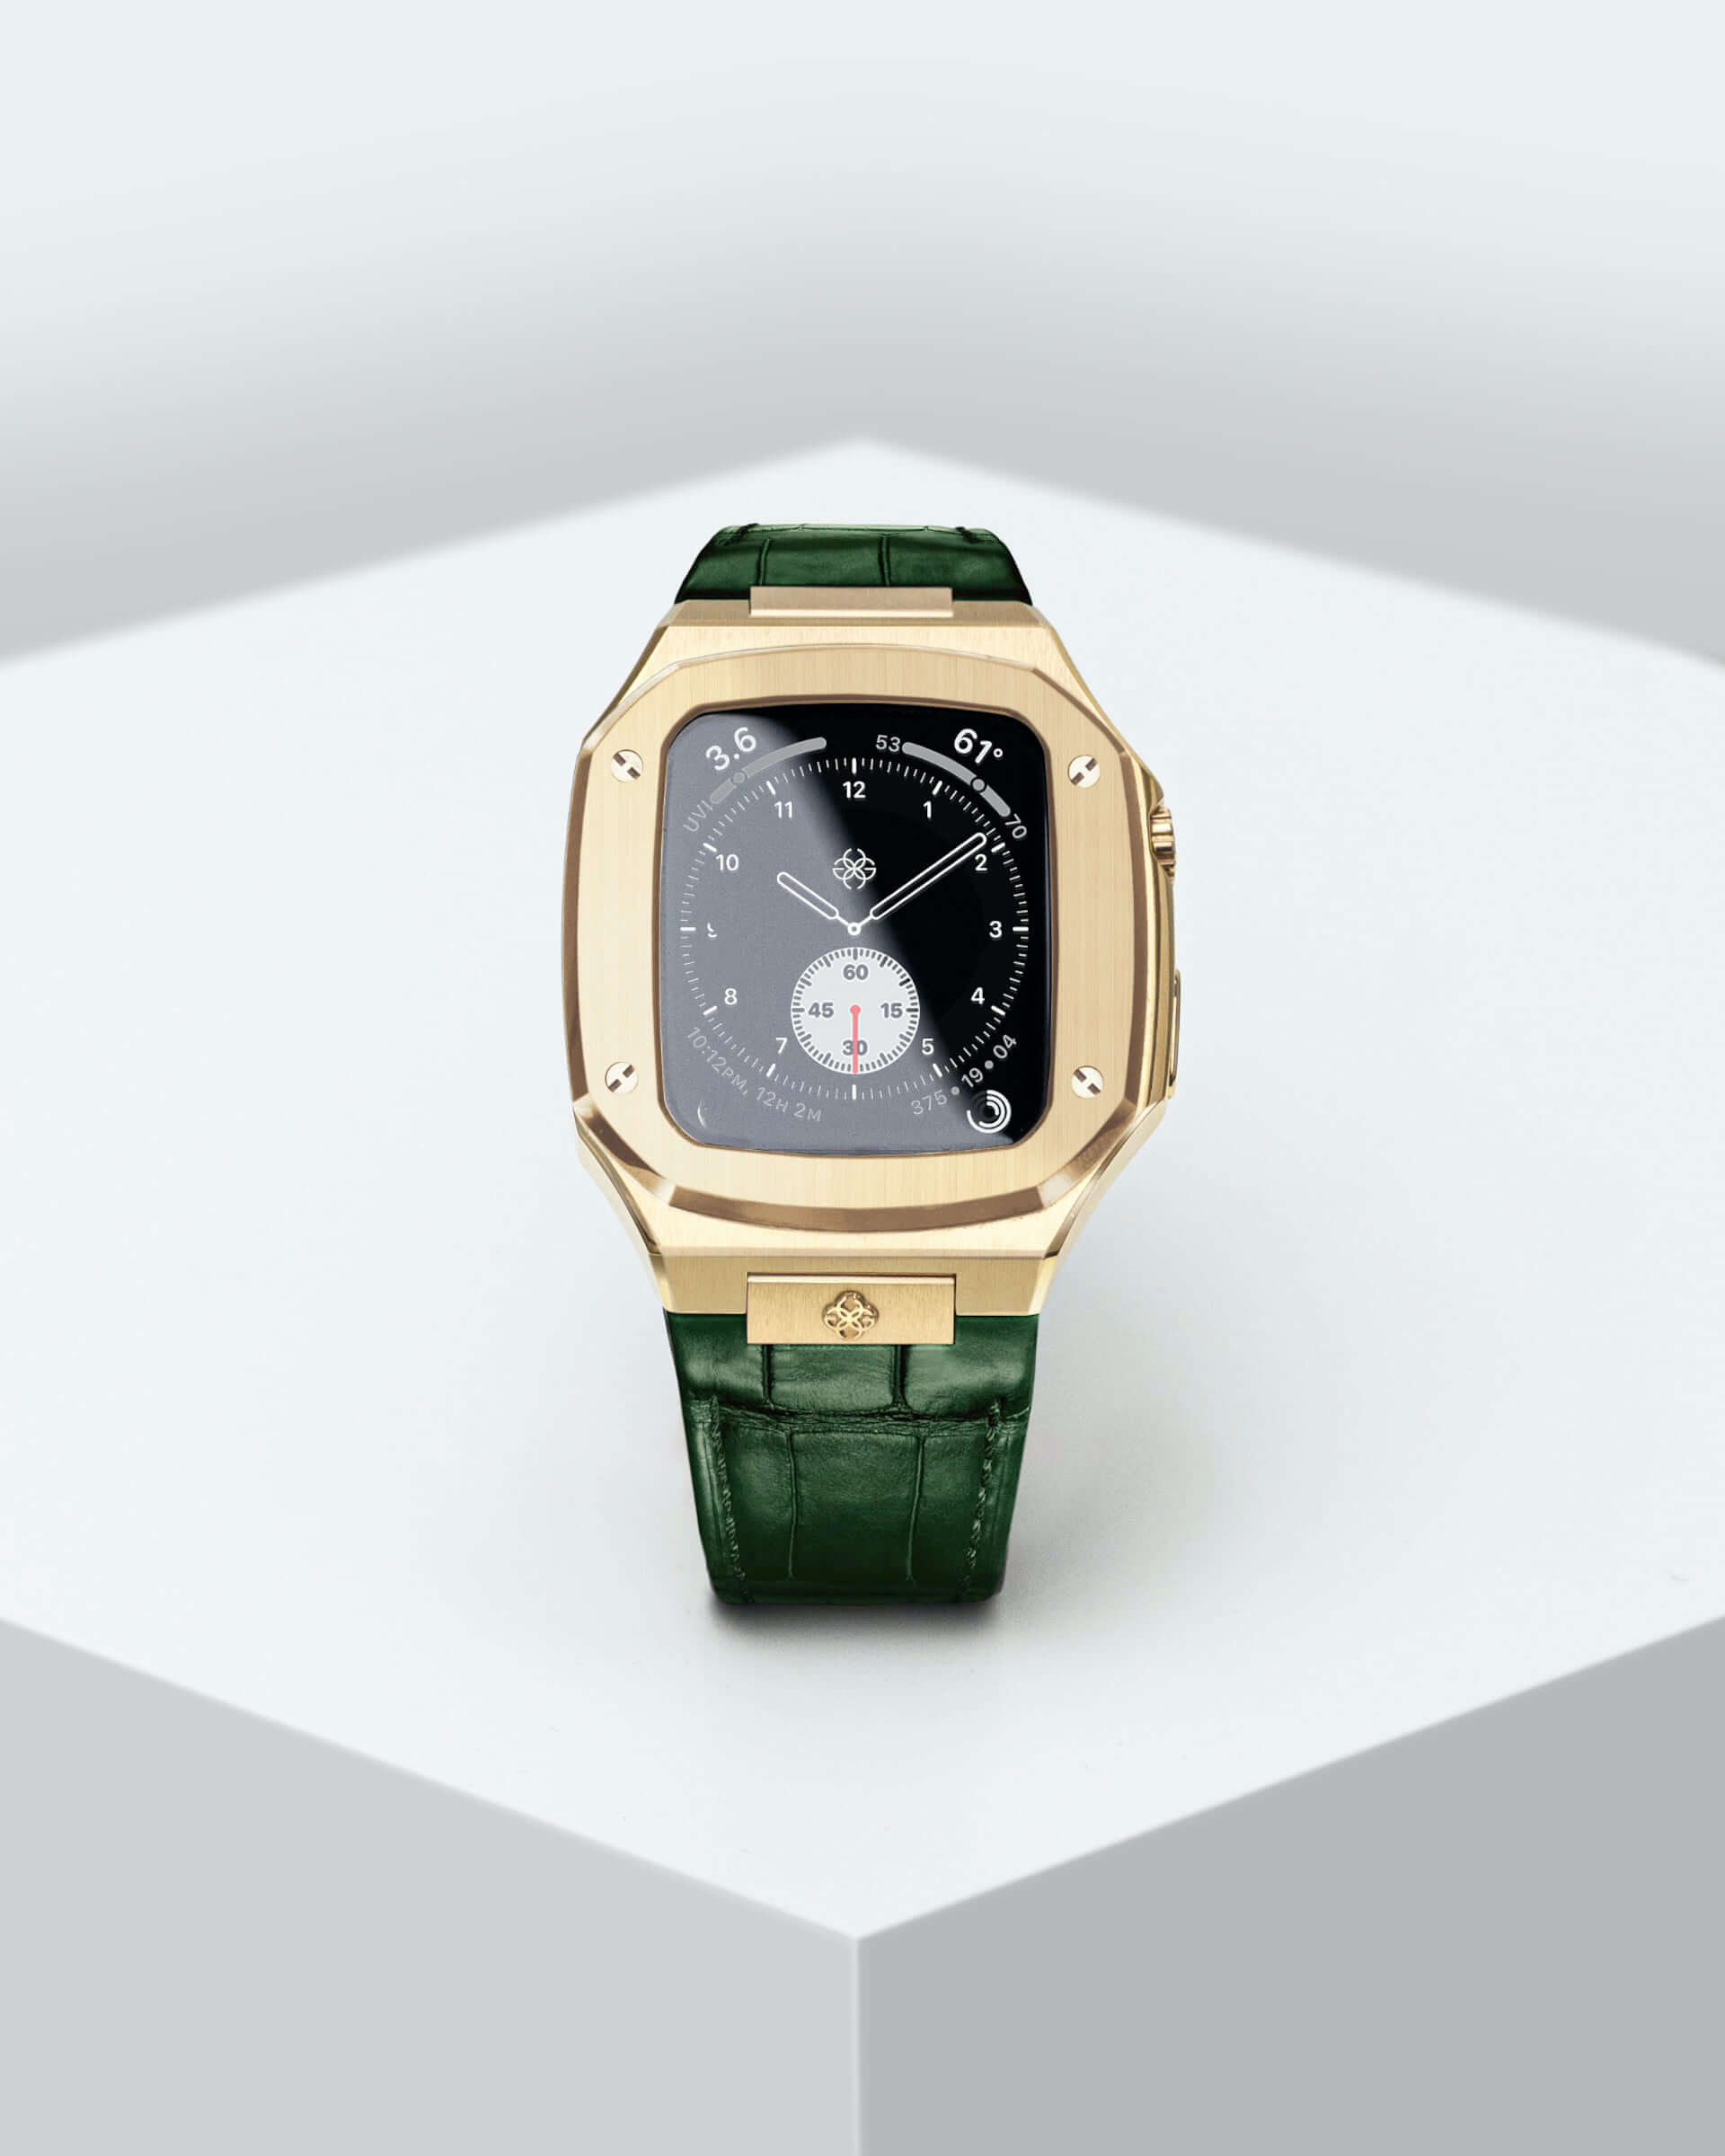 「GOLDEN CONCEPT」の高級Apple Watchケースにレザーストラップモデルが登場！世界999個限定で予約受付スタート tech201116_golden-concept_1-1920x2400